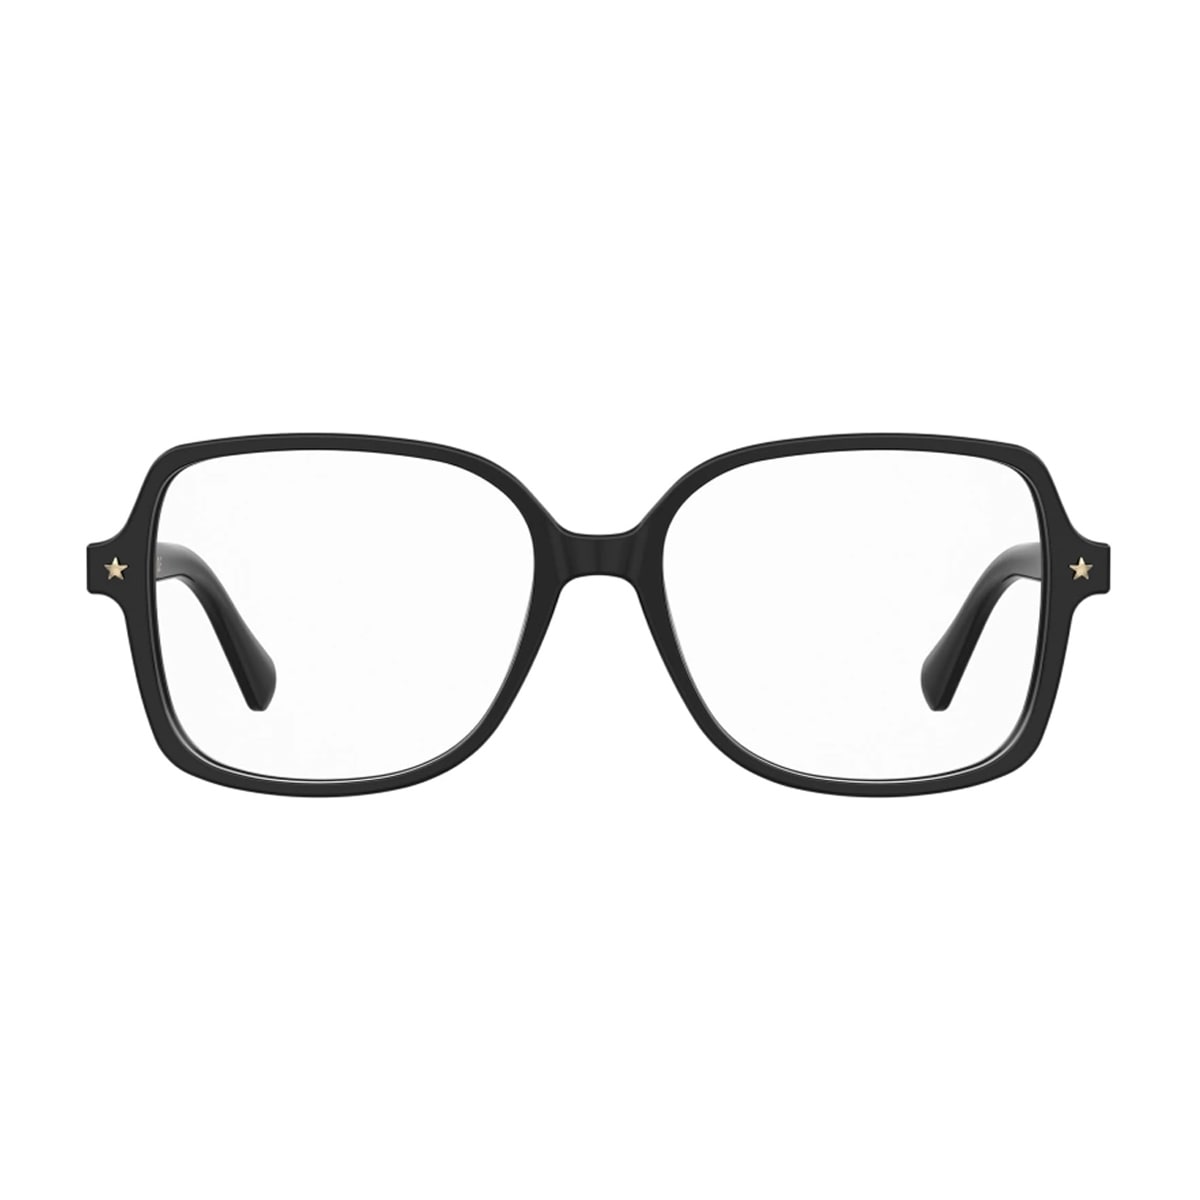 Cf 1026 807/16 Black Glasses